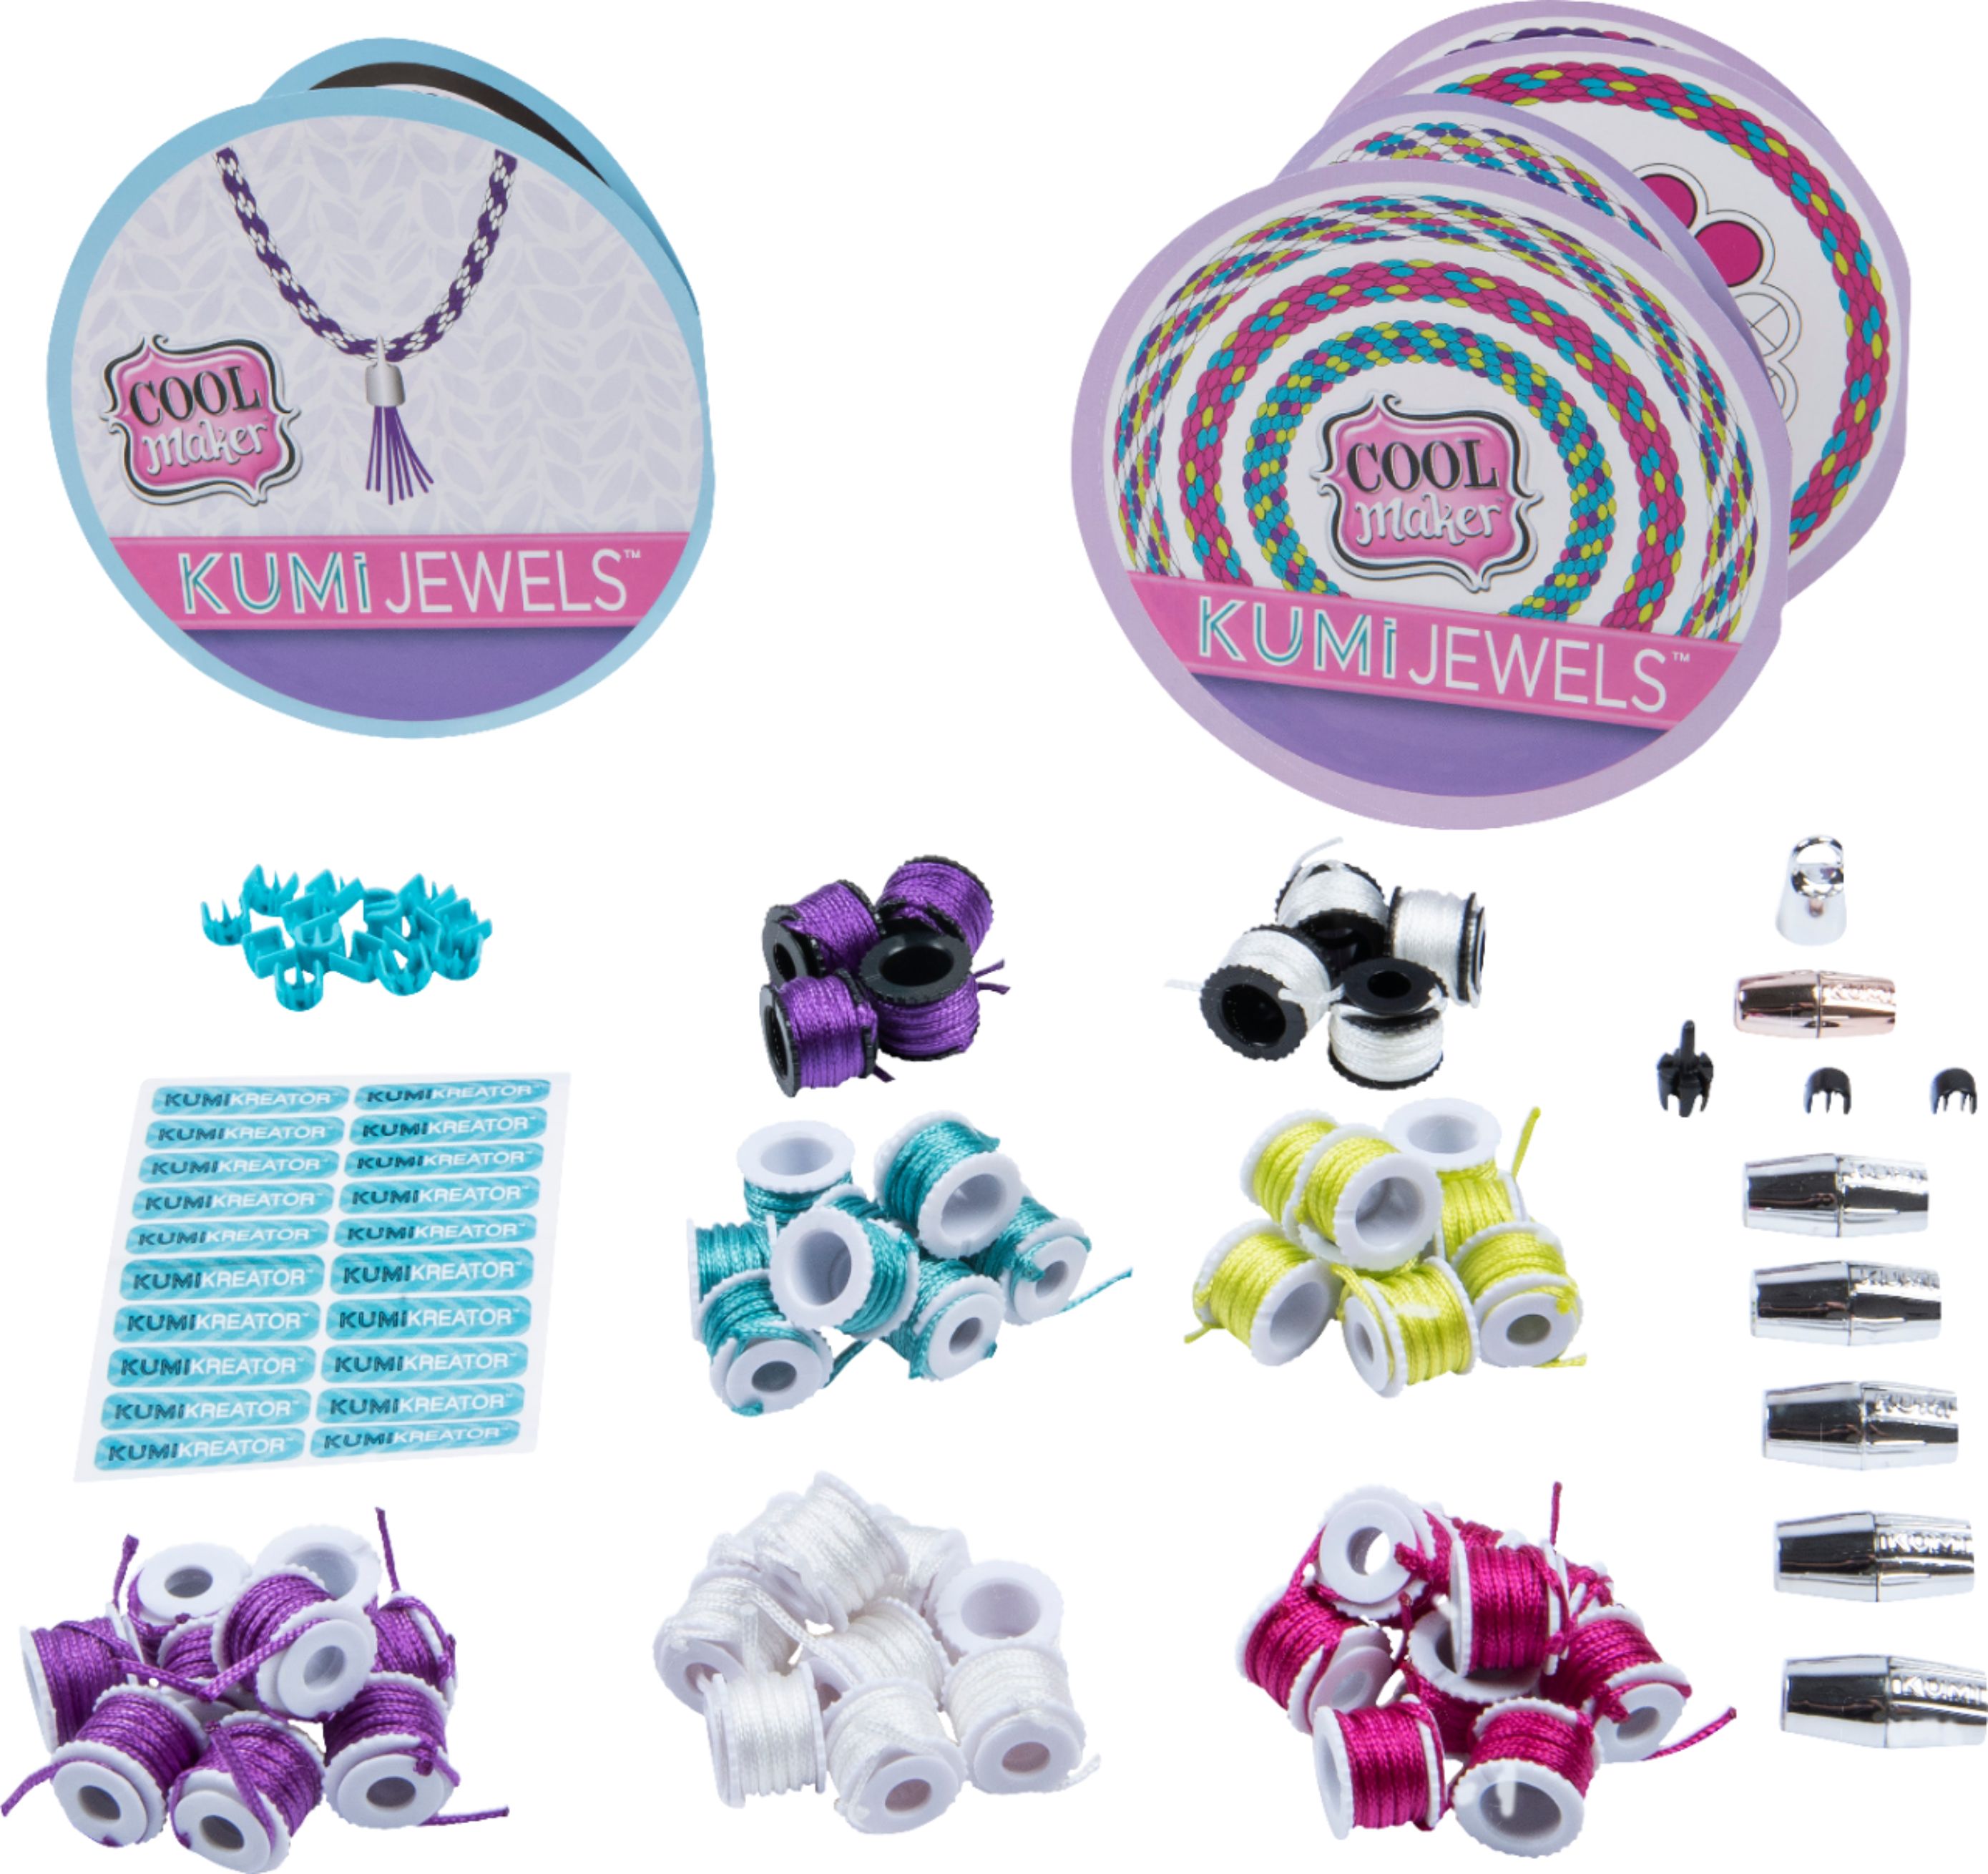 Cool Maker 2-in-1 KumiKreator Necklace and Bracelet Maker Kit 6053897 -  Best Buy